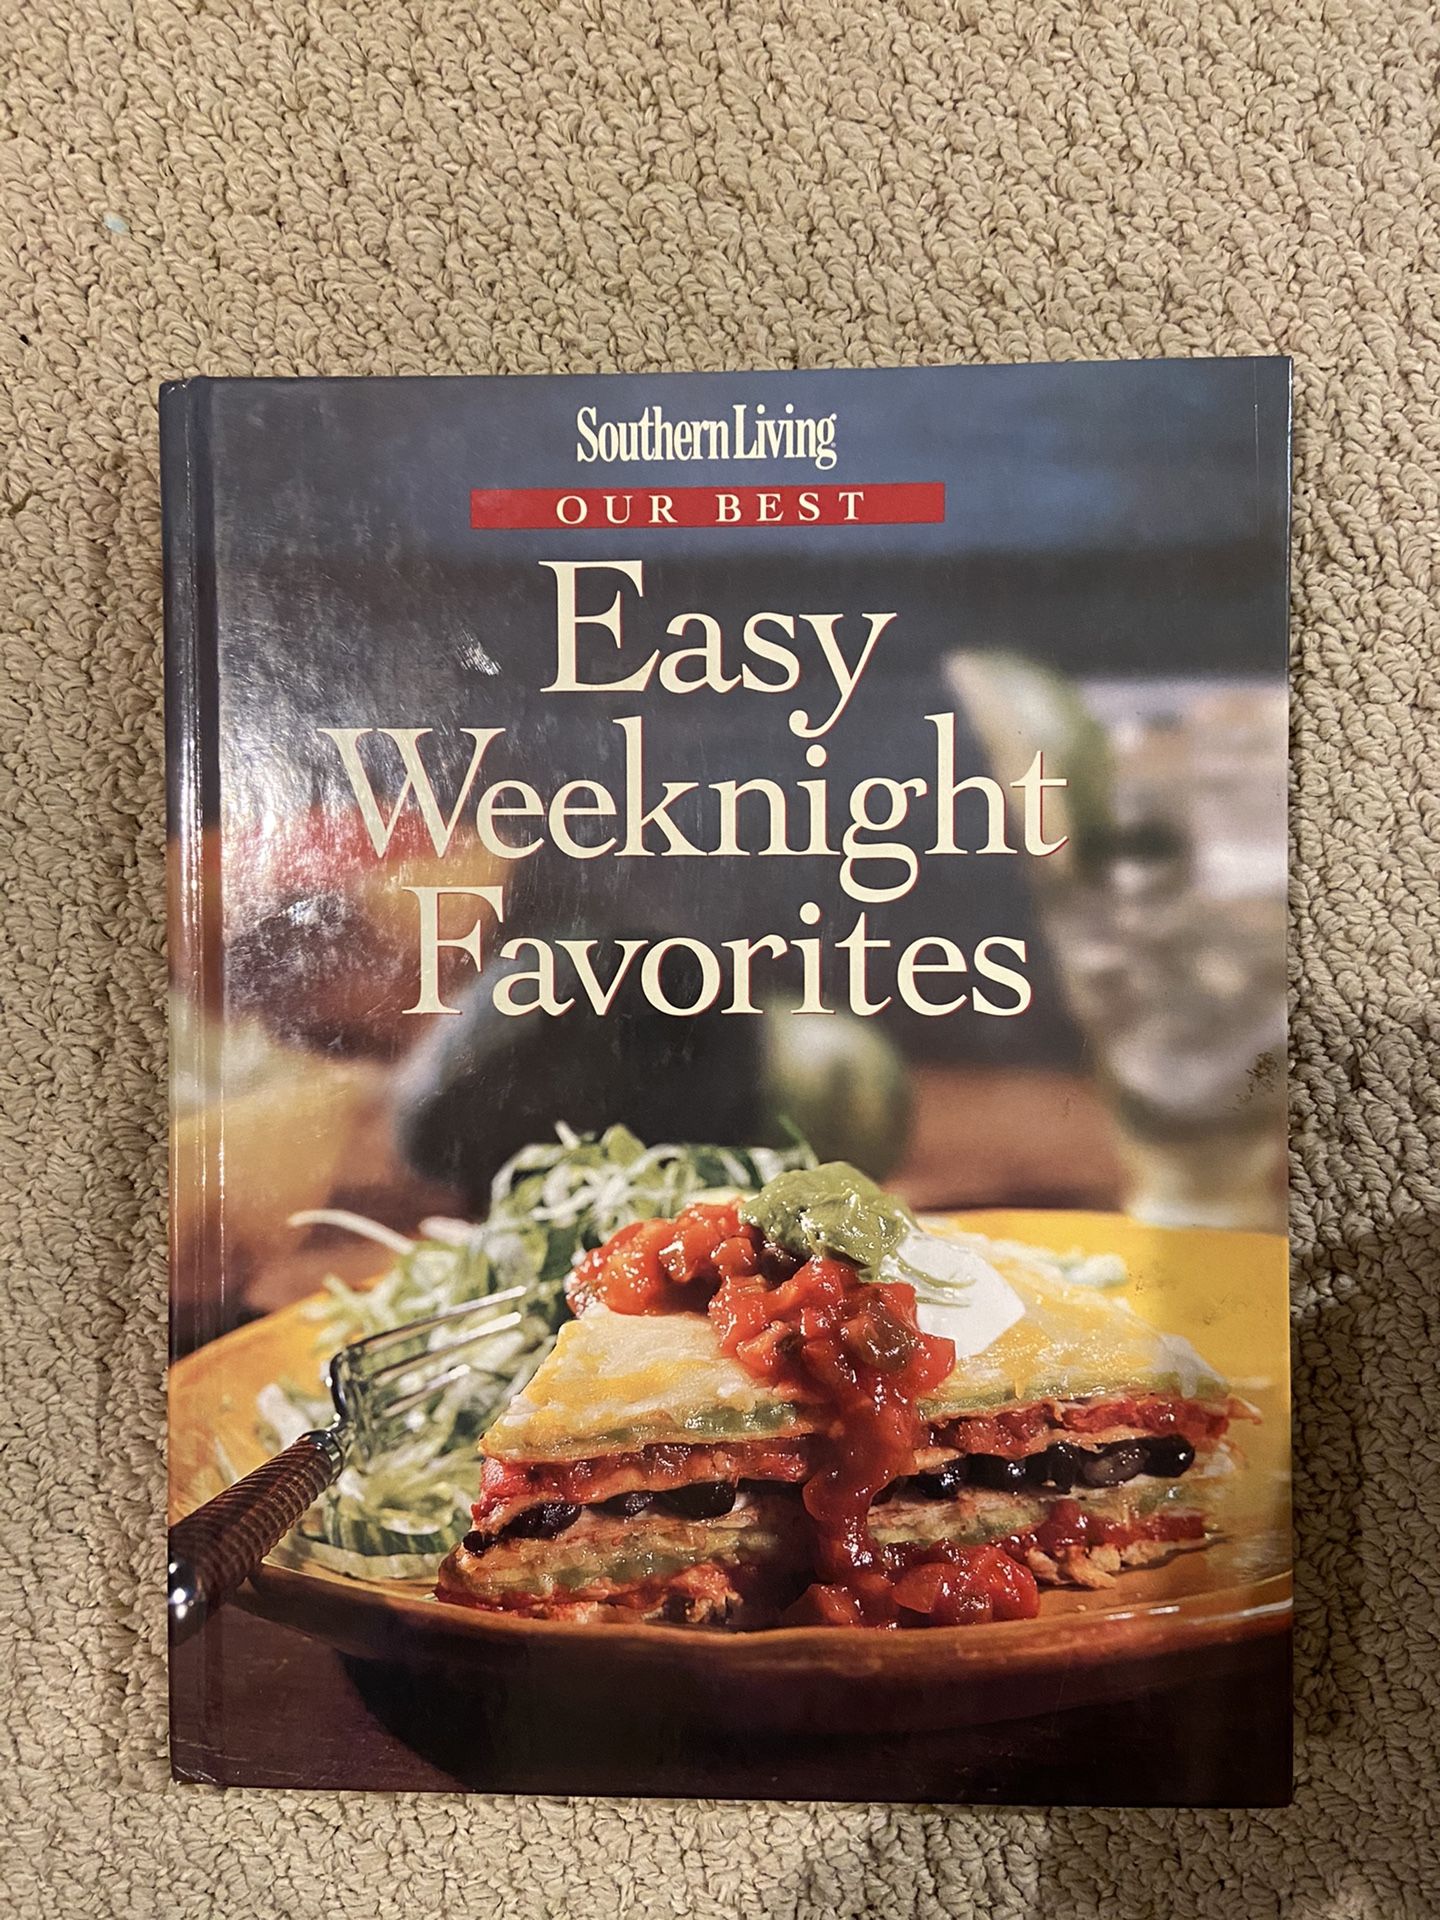 Hardcover Southern Living cookbook: Easy Weeknight Favorites